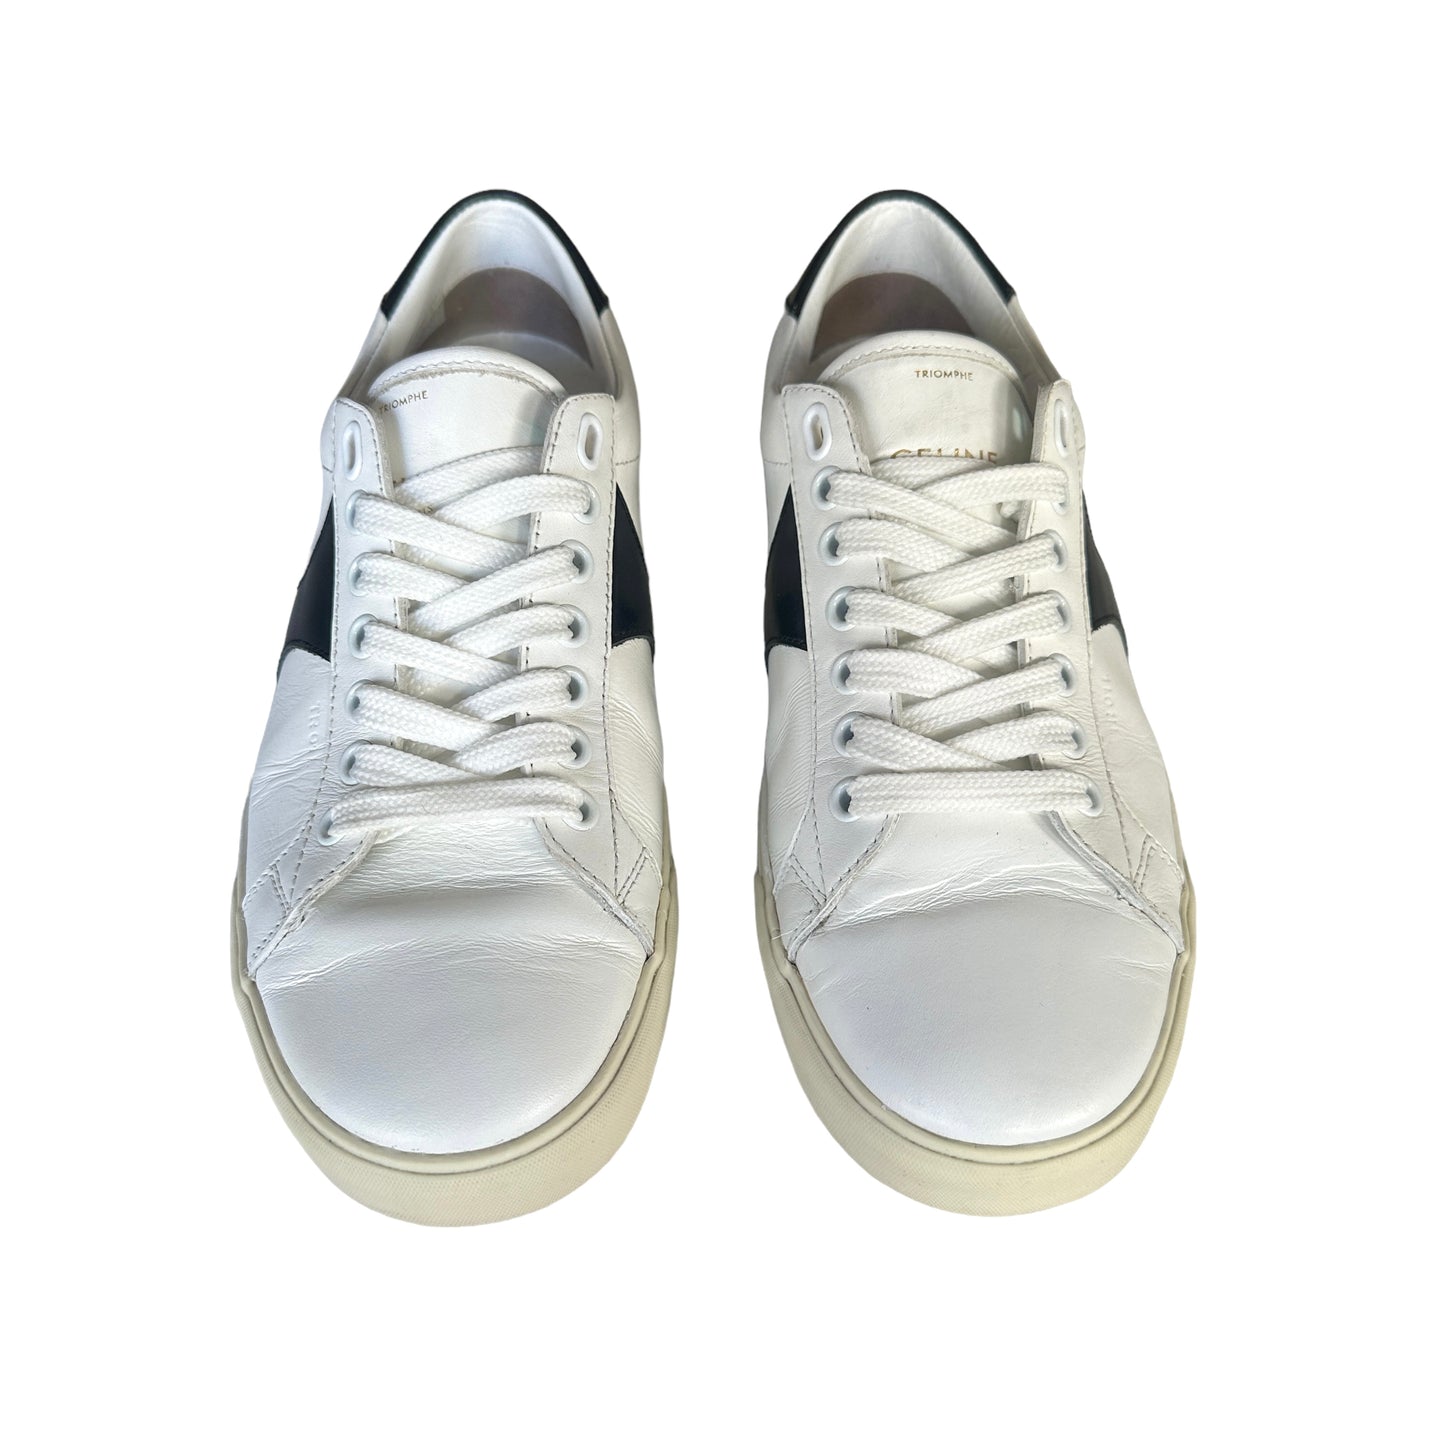 White Sneakers - 8